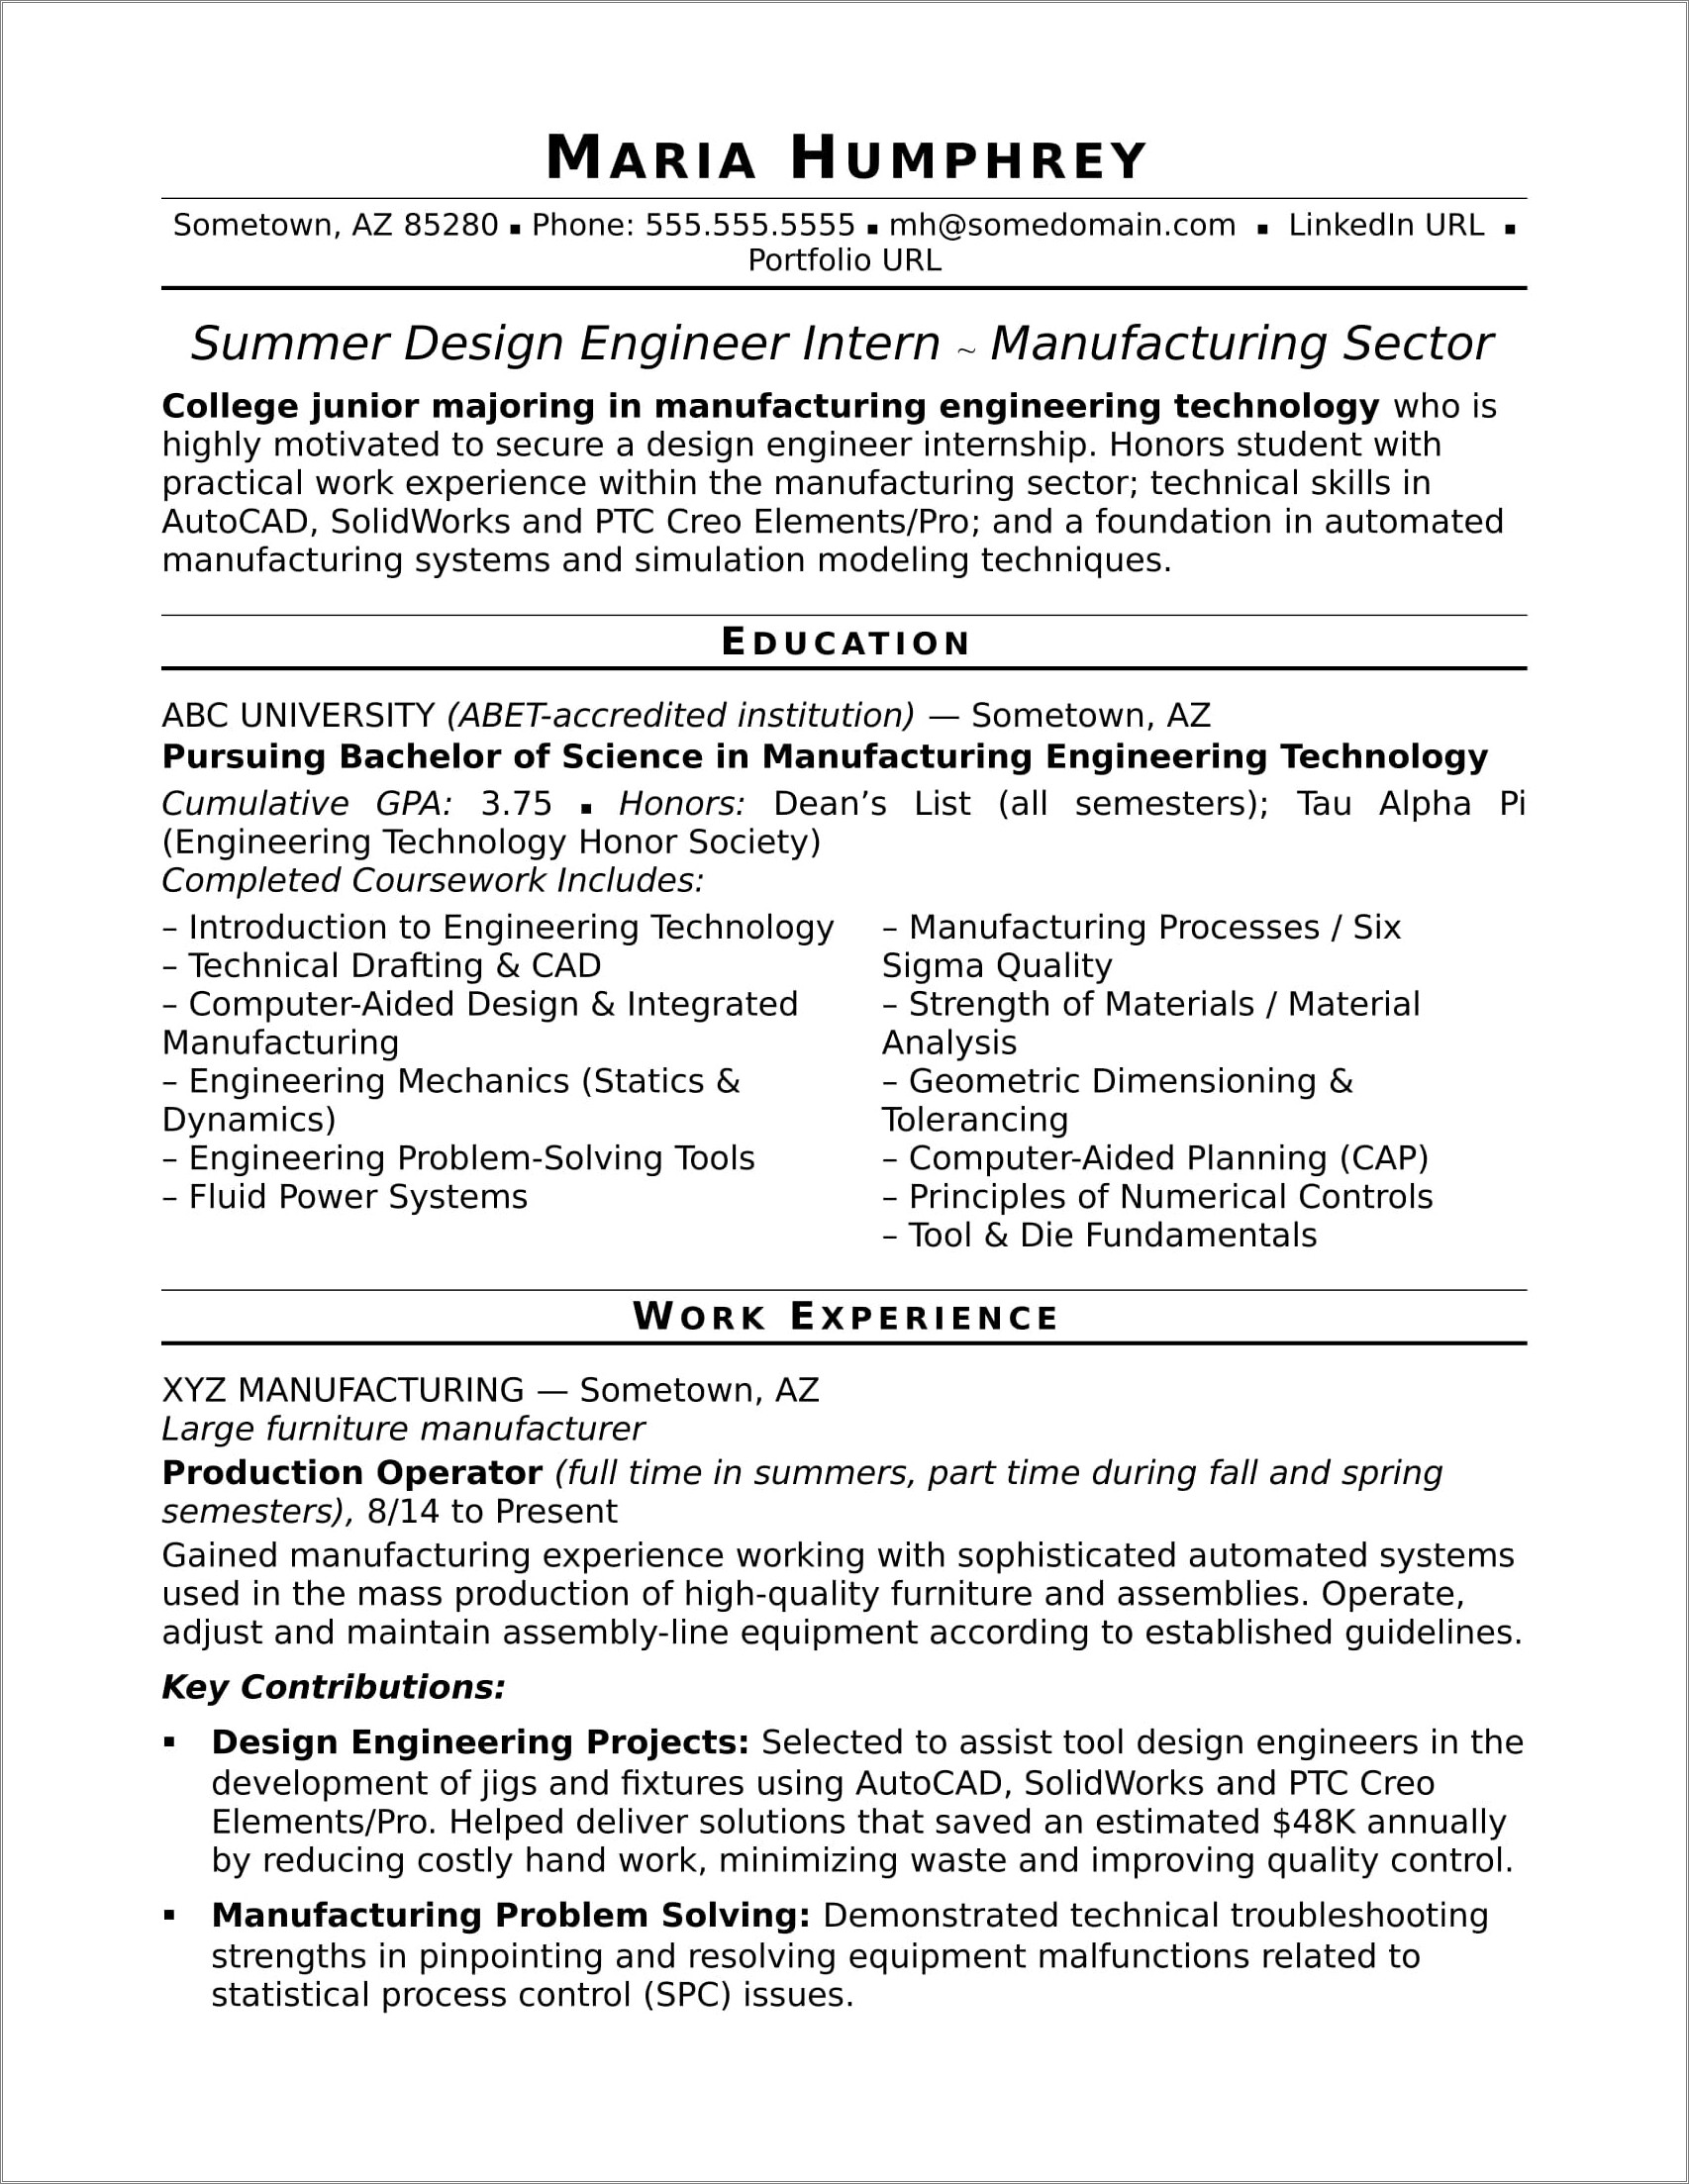 Sample Resumes Of Entry Level Design Engineer